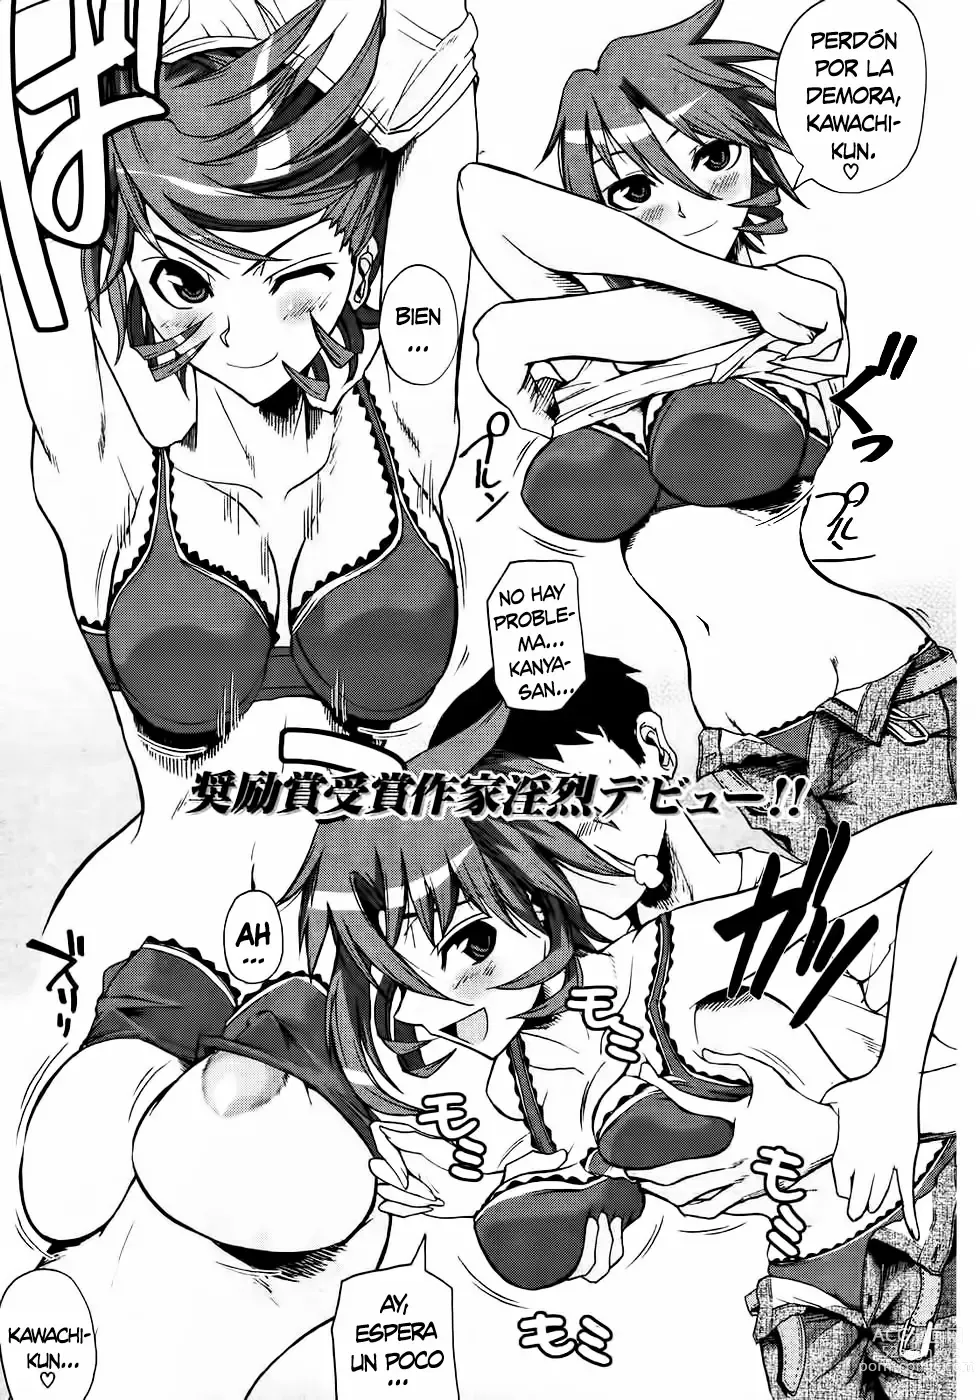 Page 1 of manga West